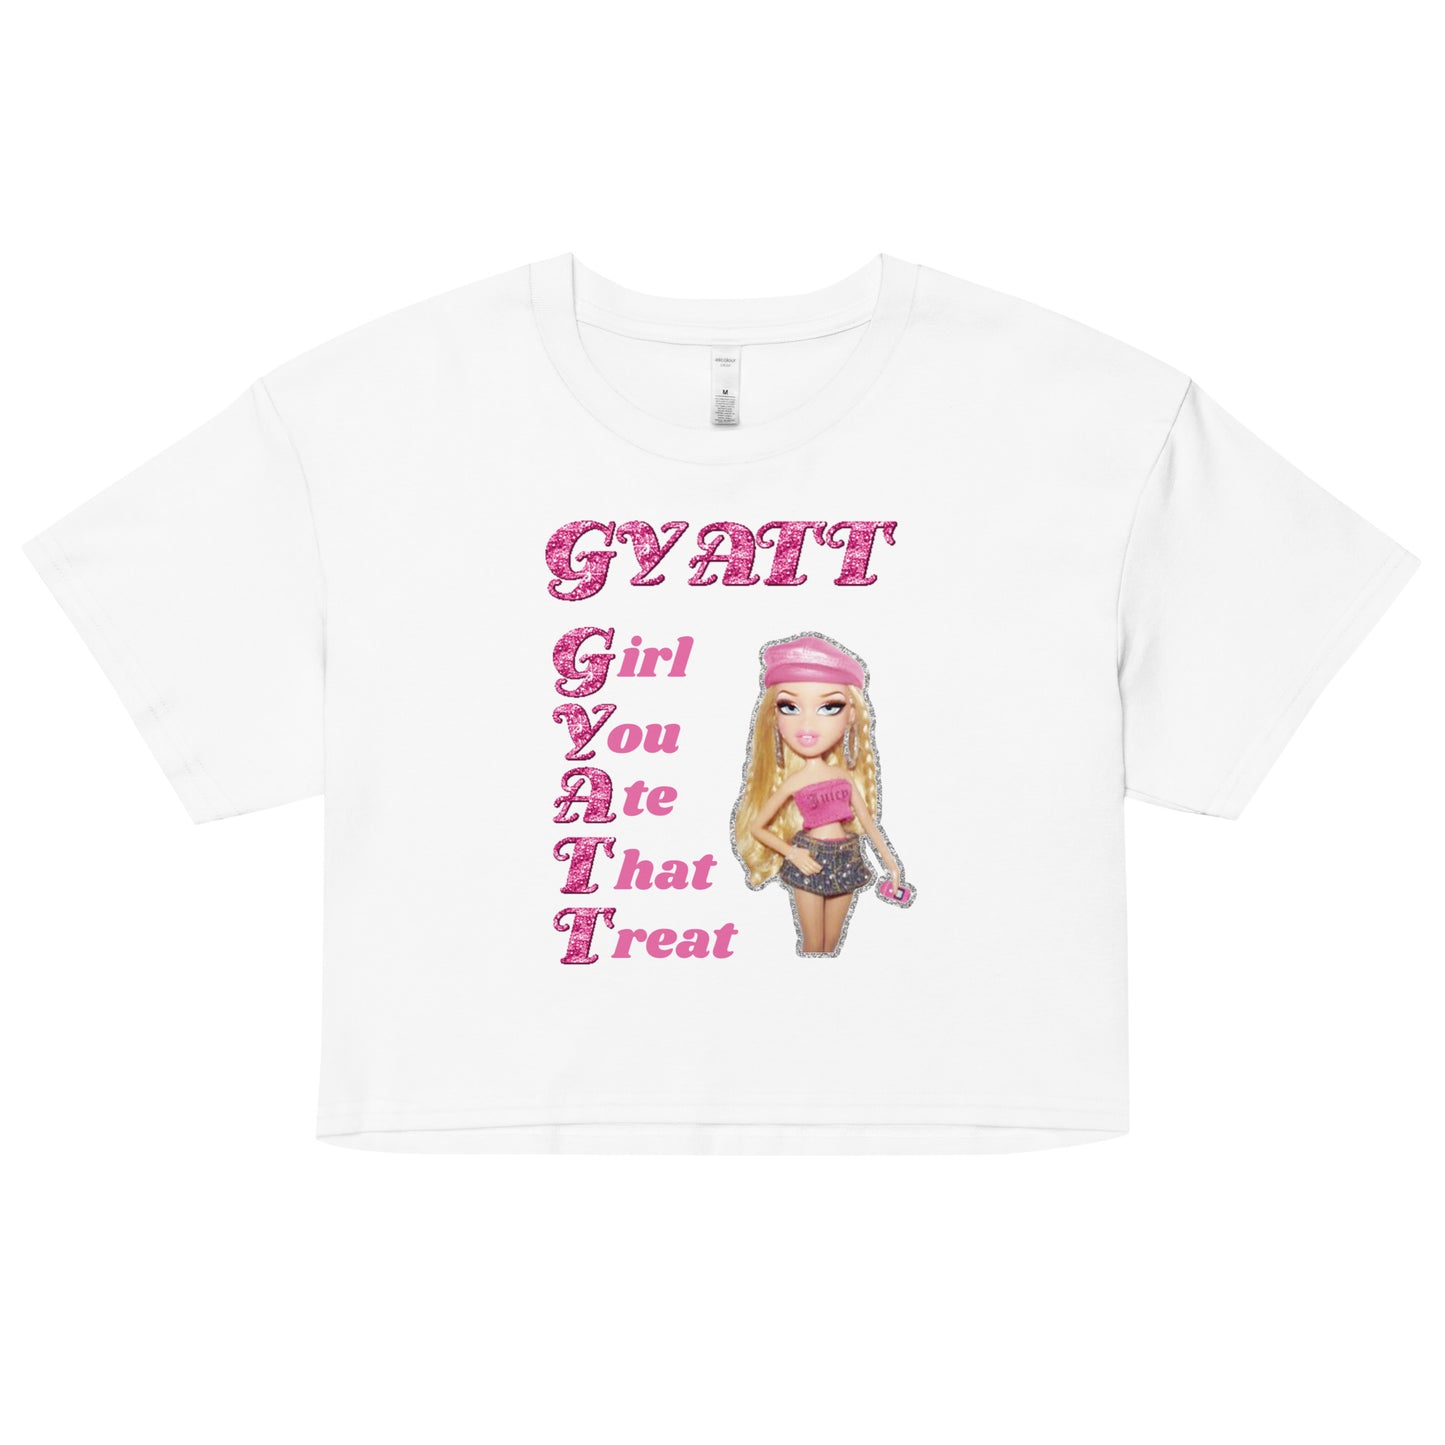 GYATT (Girl You Ate That Treat) crop top